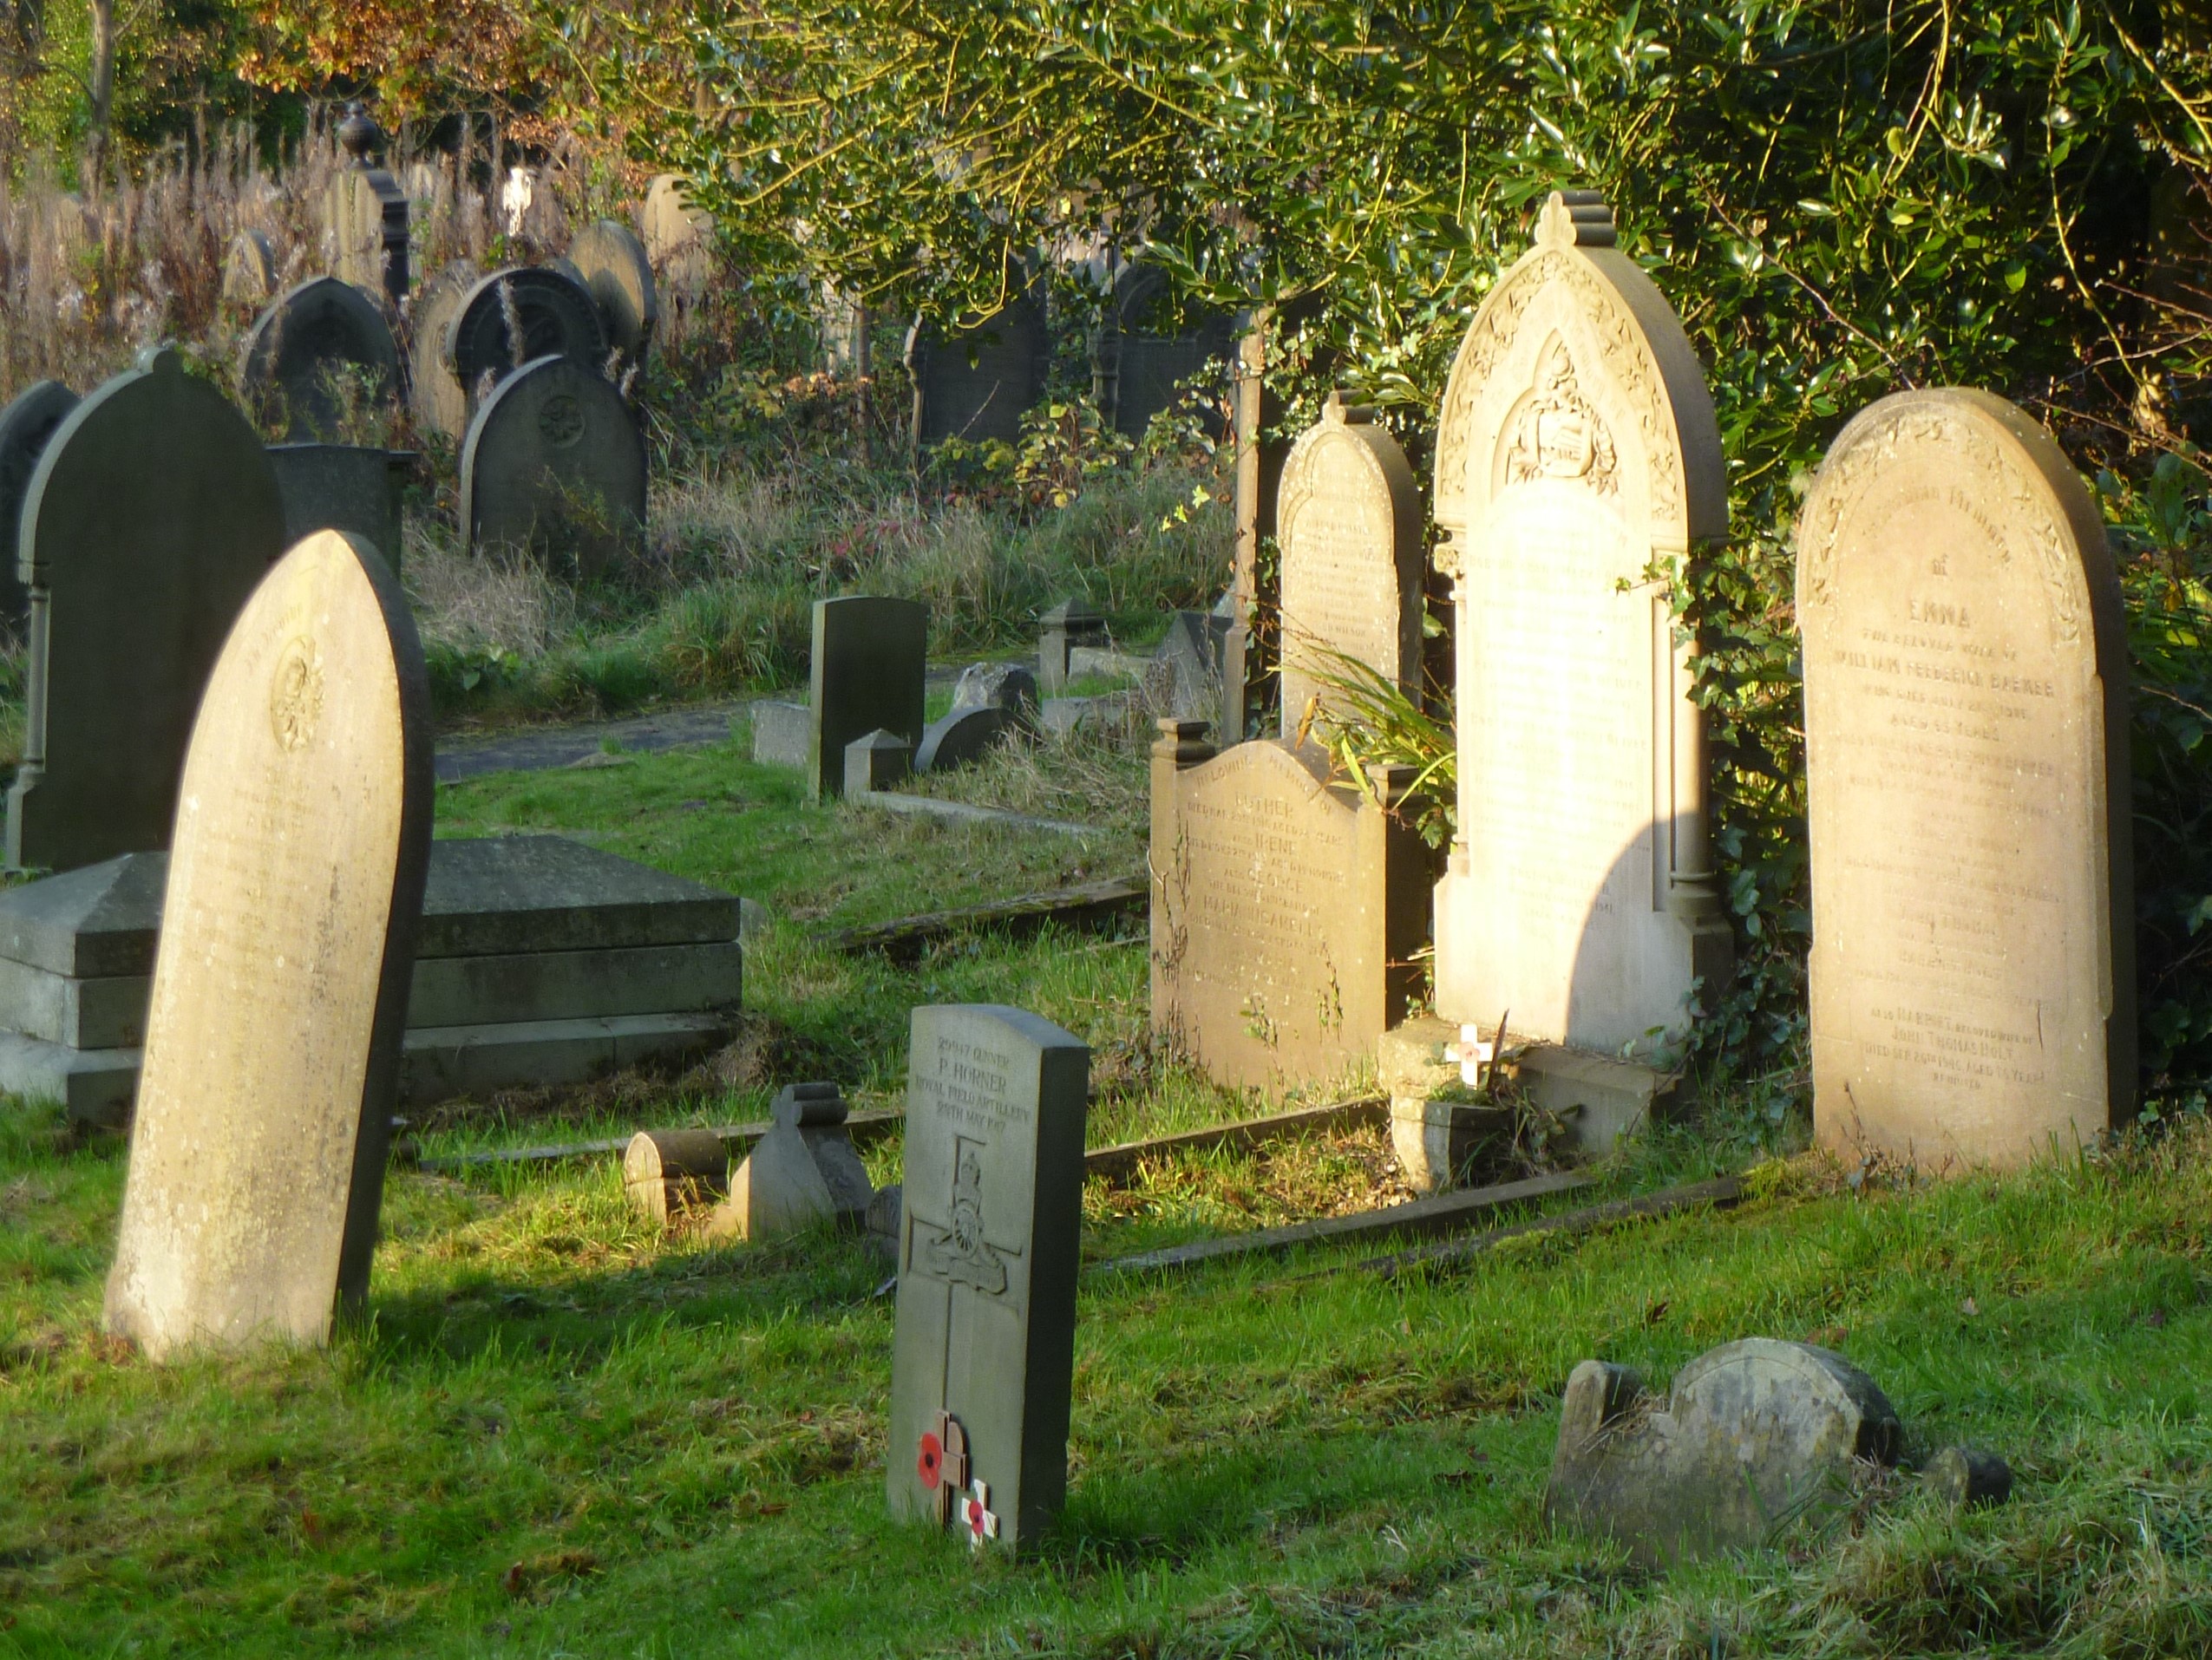 Gravestones in the sunshine at Walkley Cemetery